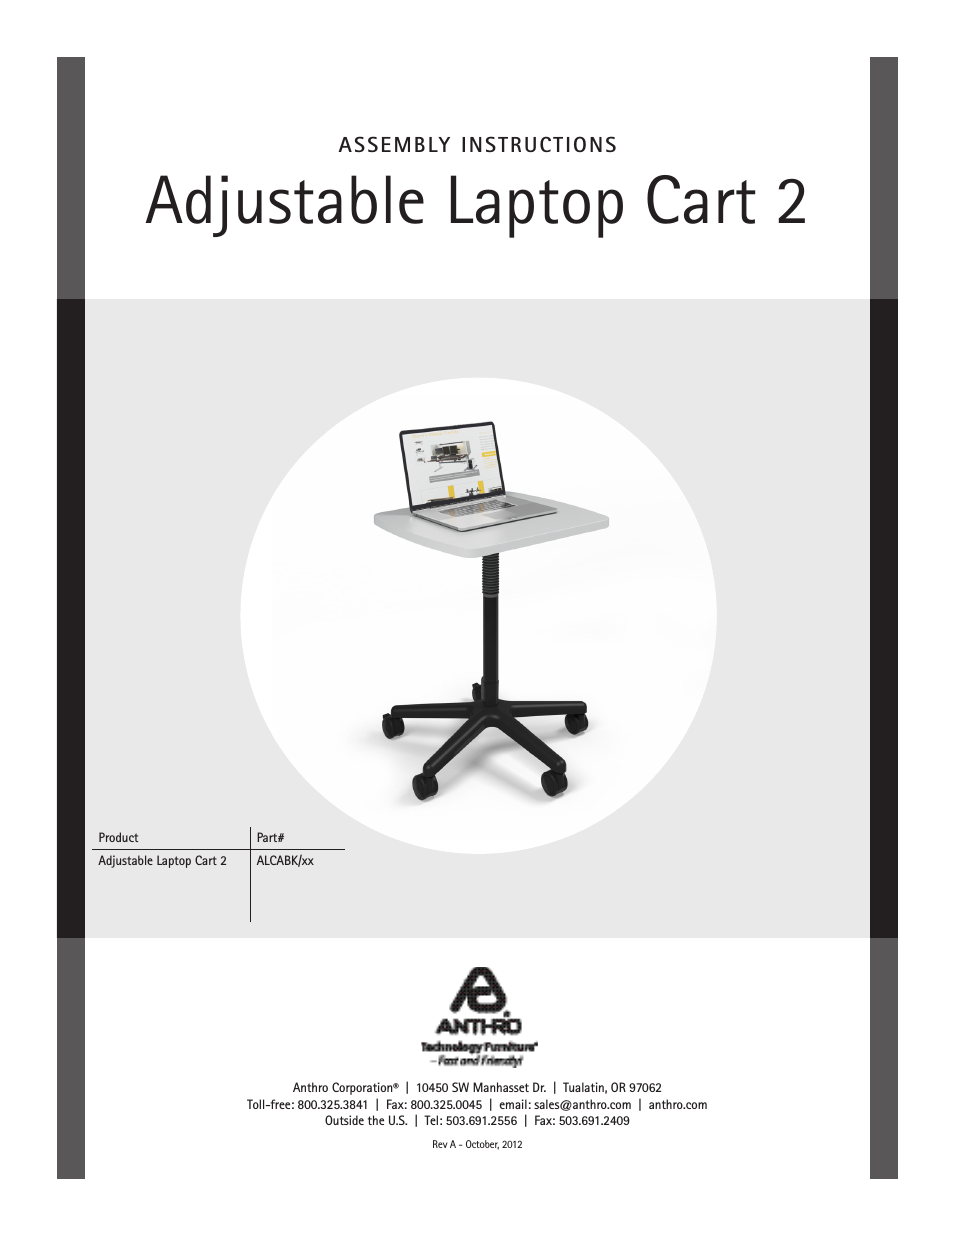 Adjustable Laptop Cart 2 Assembly Instructions